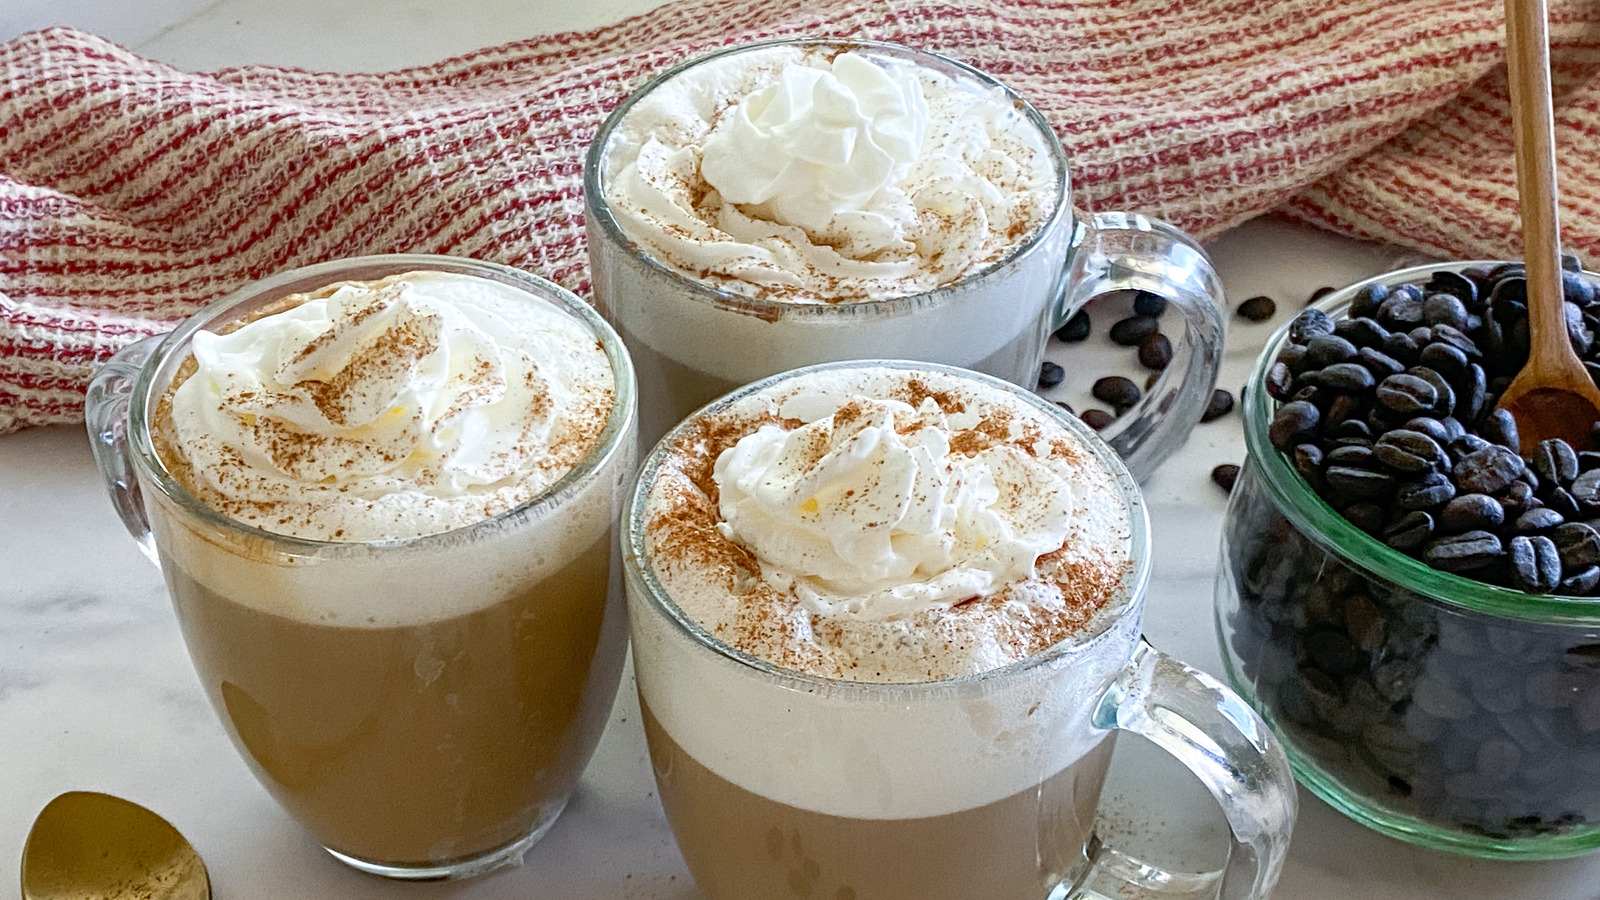 https://www.tastingtable.com/img/gallery/homemade-cafe-latte-recipe/l-intro-1677790440.jpg